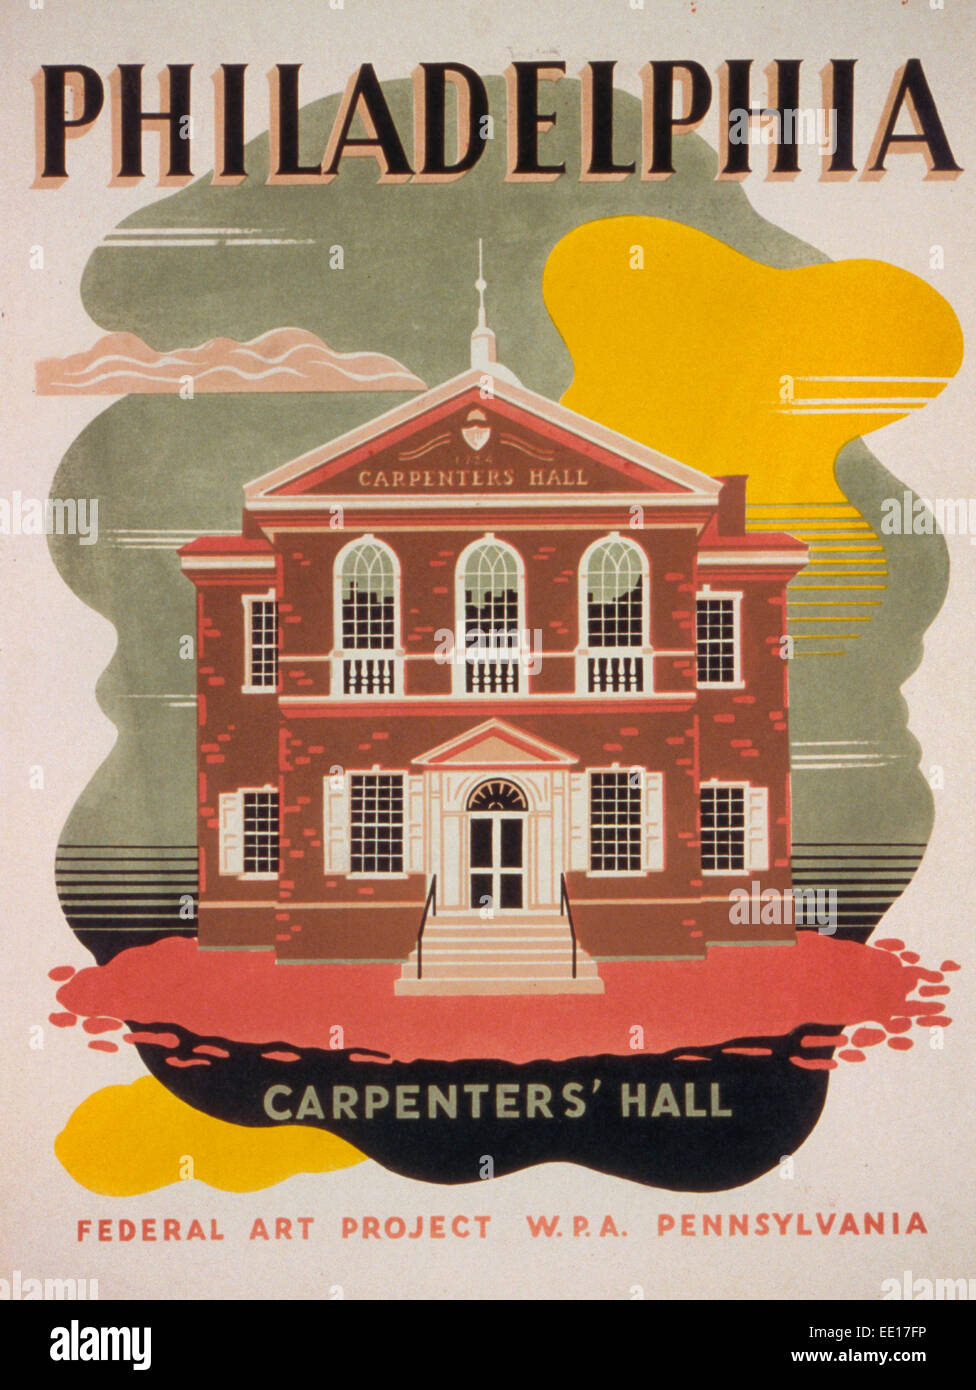 Philadelphia - Carpenters' Hall.  Poster promoting tourism, showing Carpenters' Hall in Philadelphia, Pennsylvania, circa 1938 Stock Photo